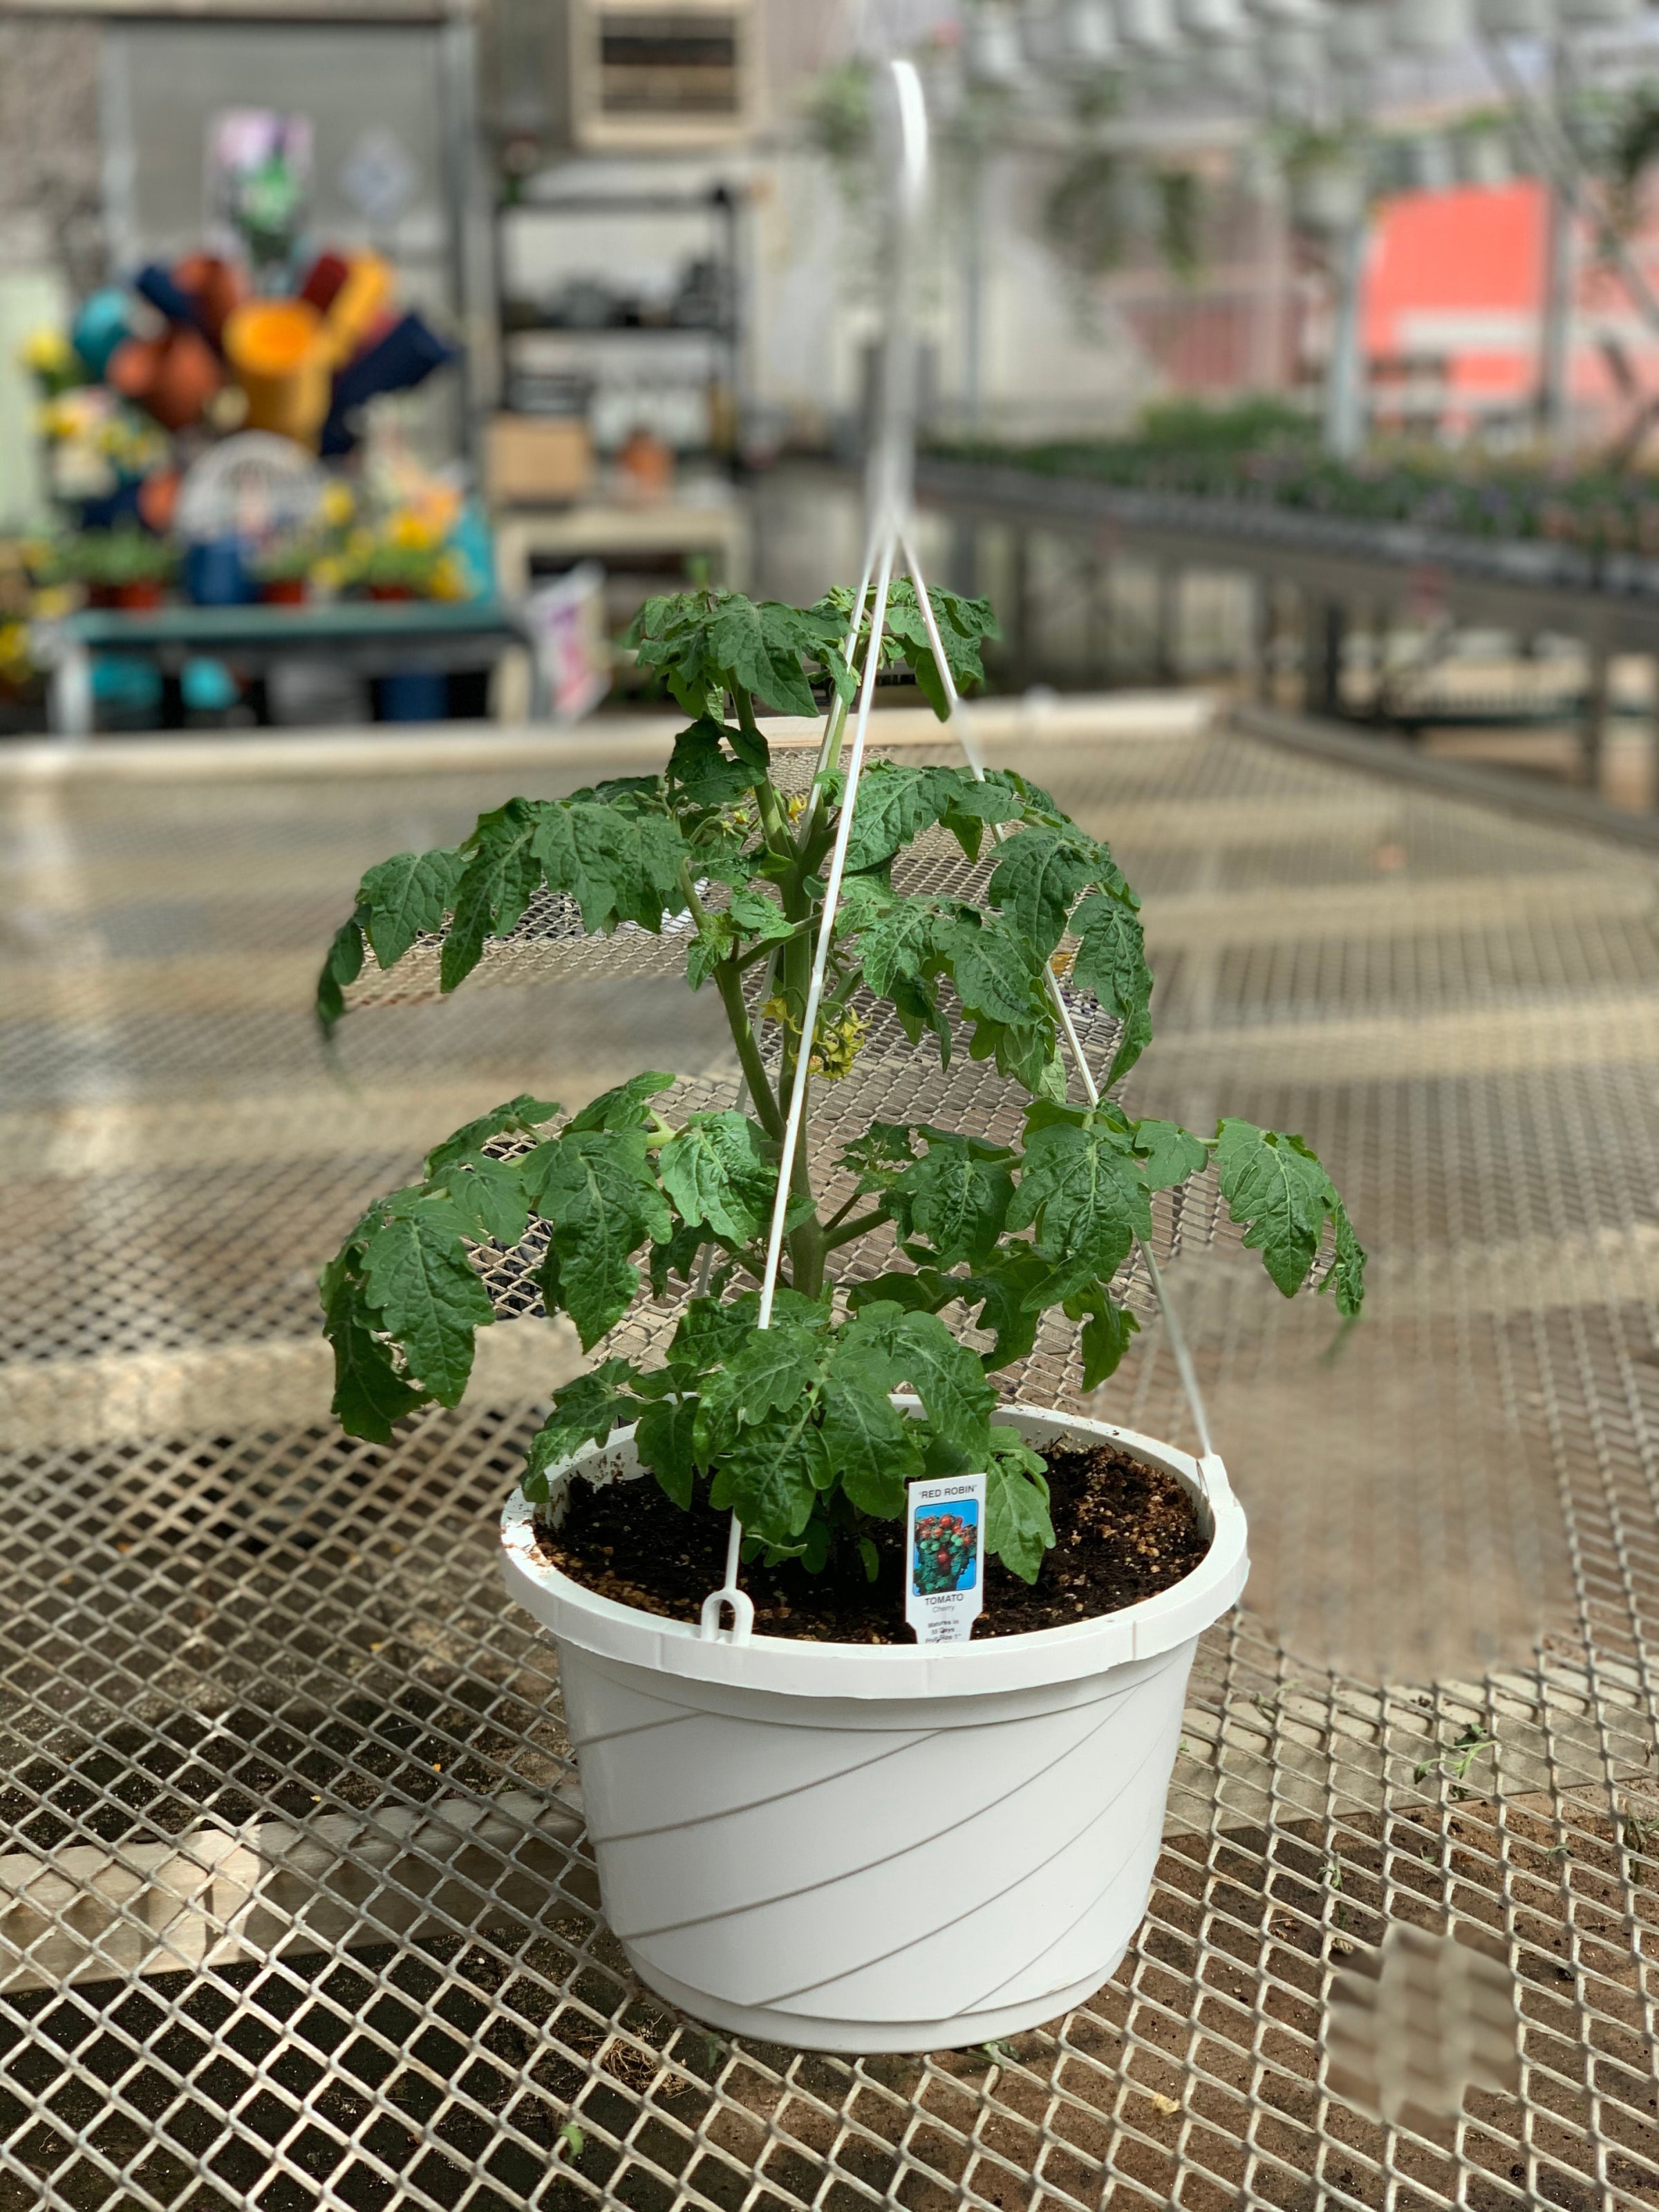 Tomato Brandywine 3.5 inch pot – Glenlea Greenhouses